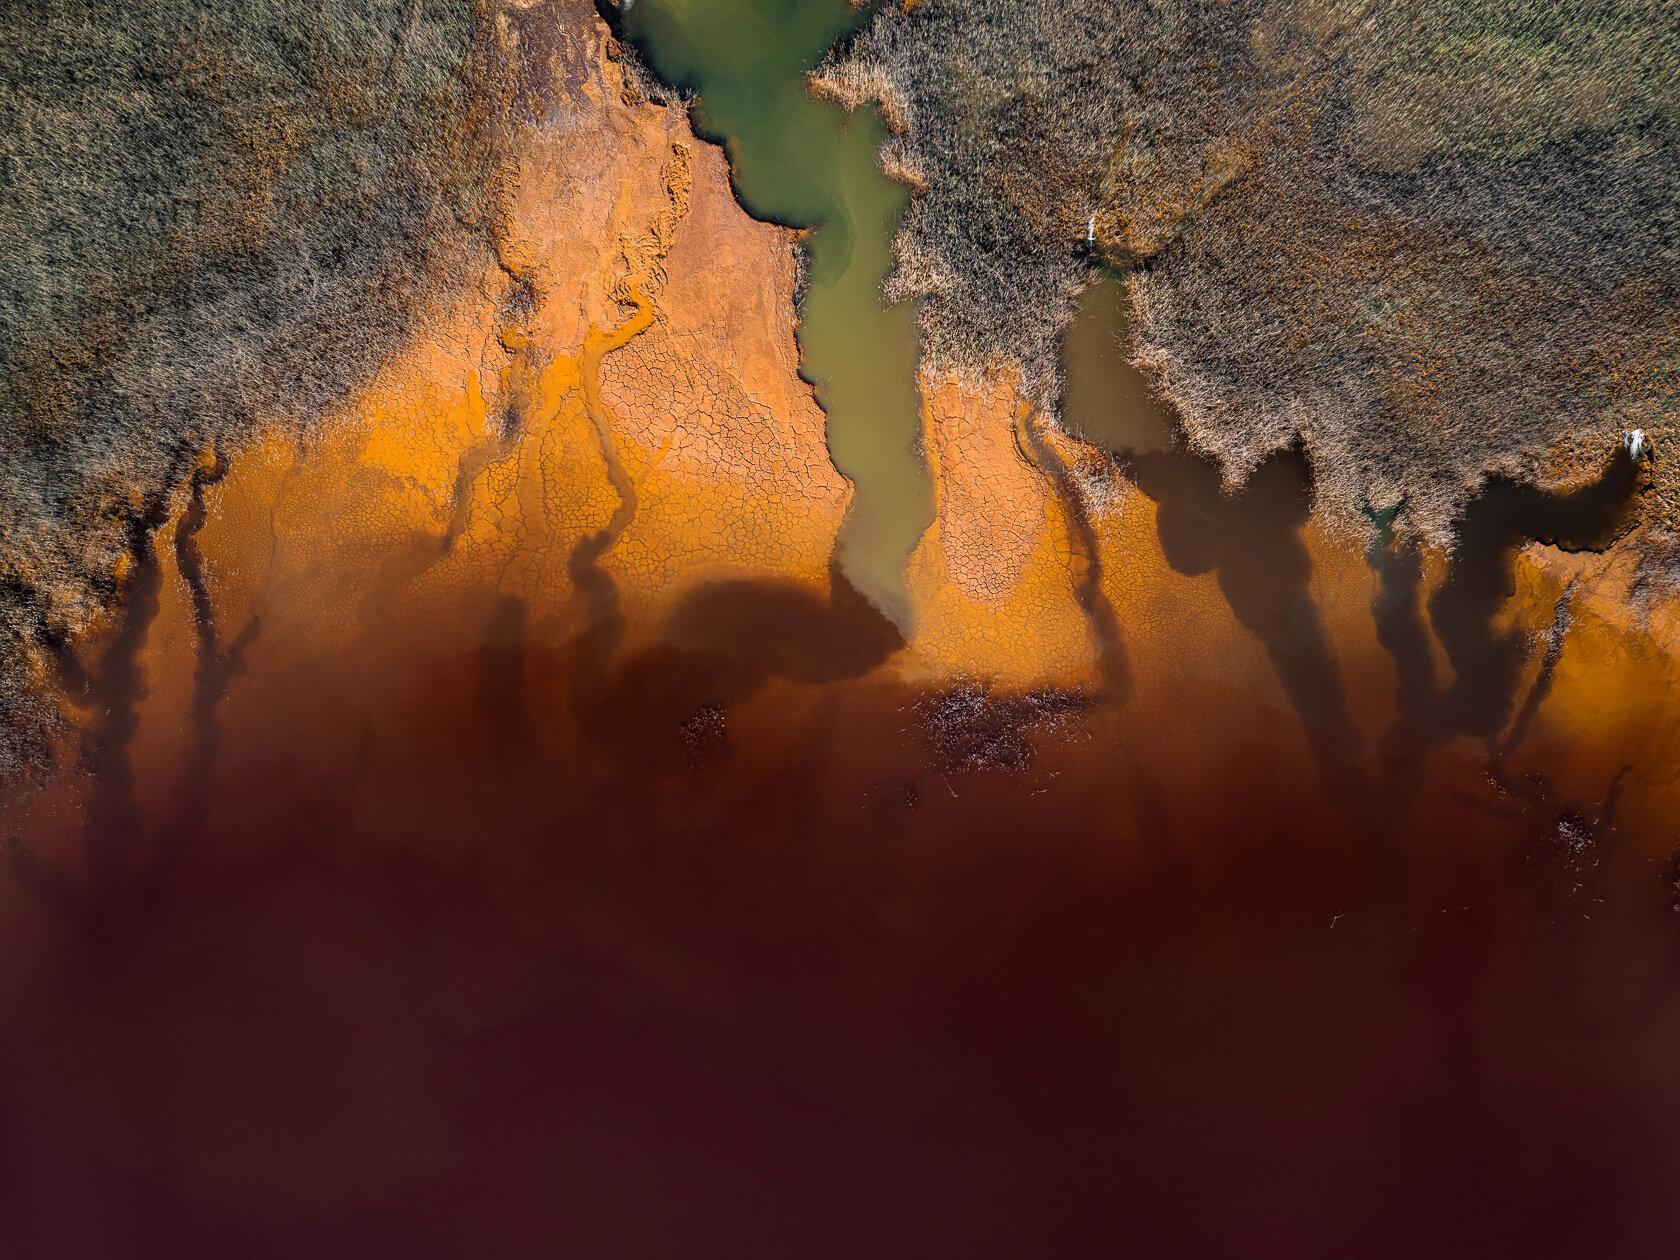 Tom Hegen Landscape Photograph - Copper Mine No. 11, Spain